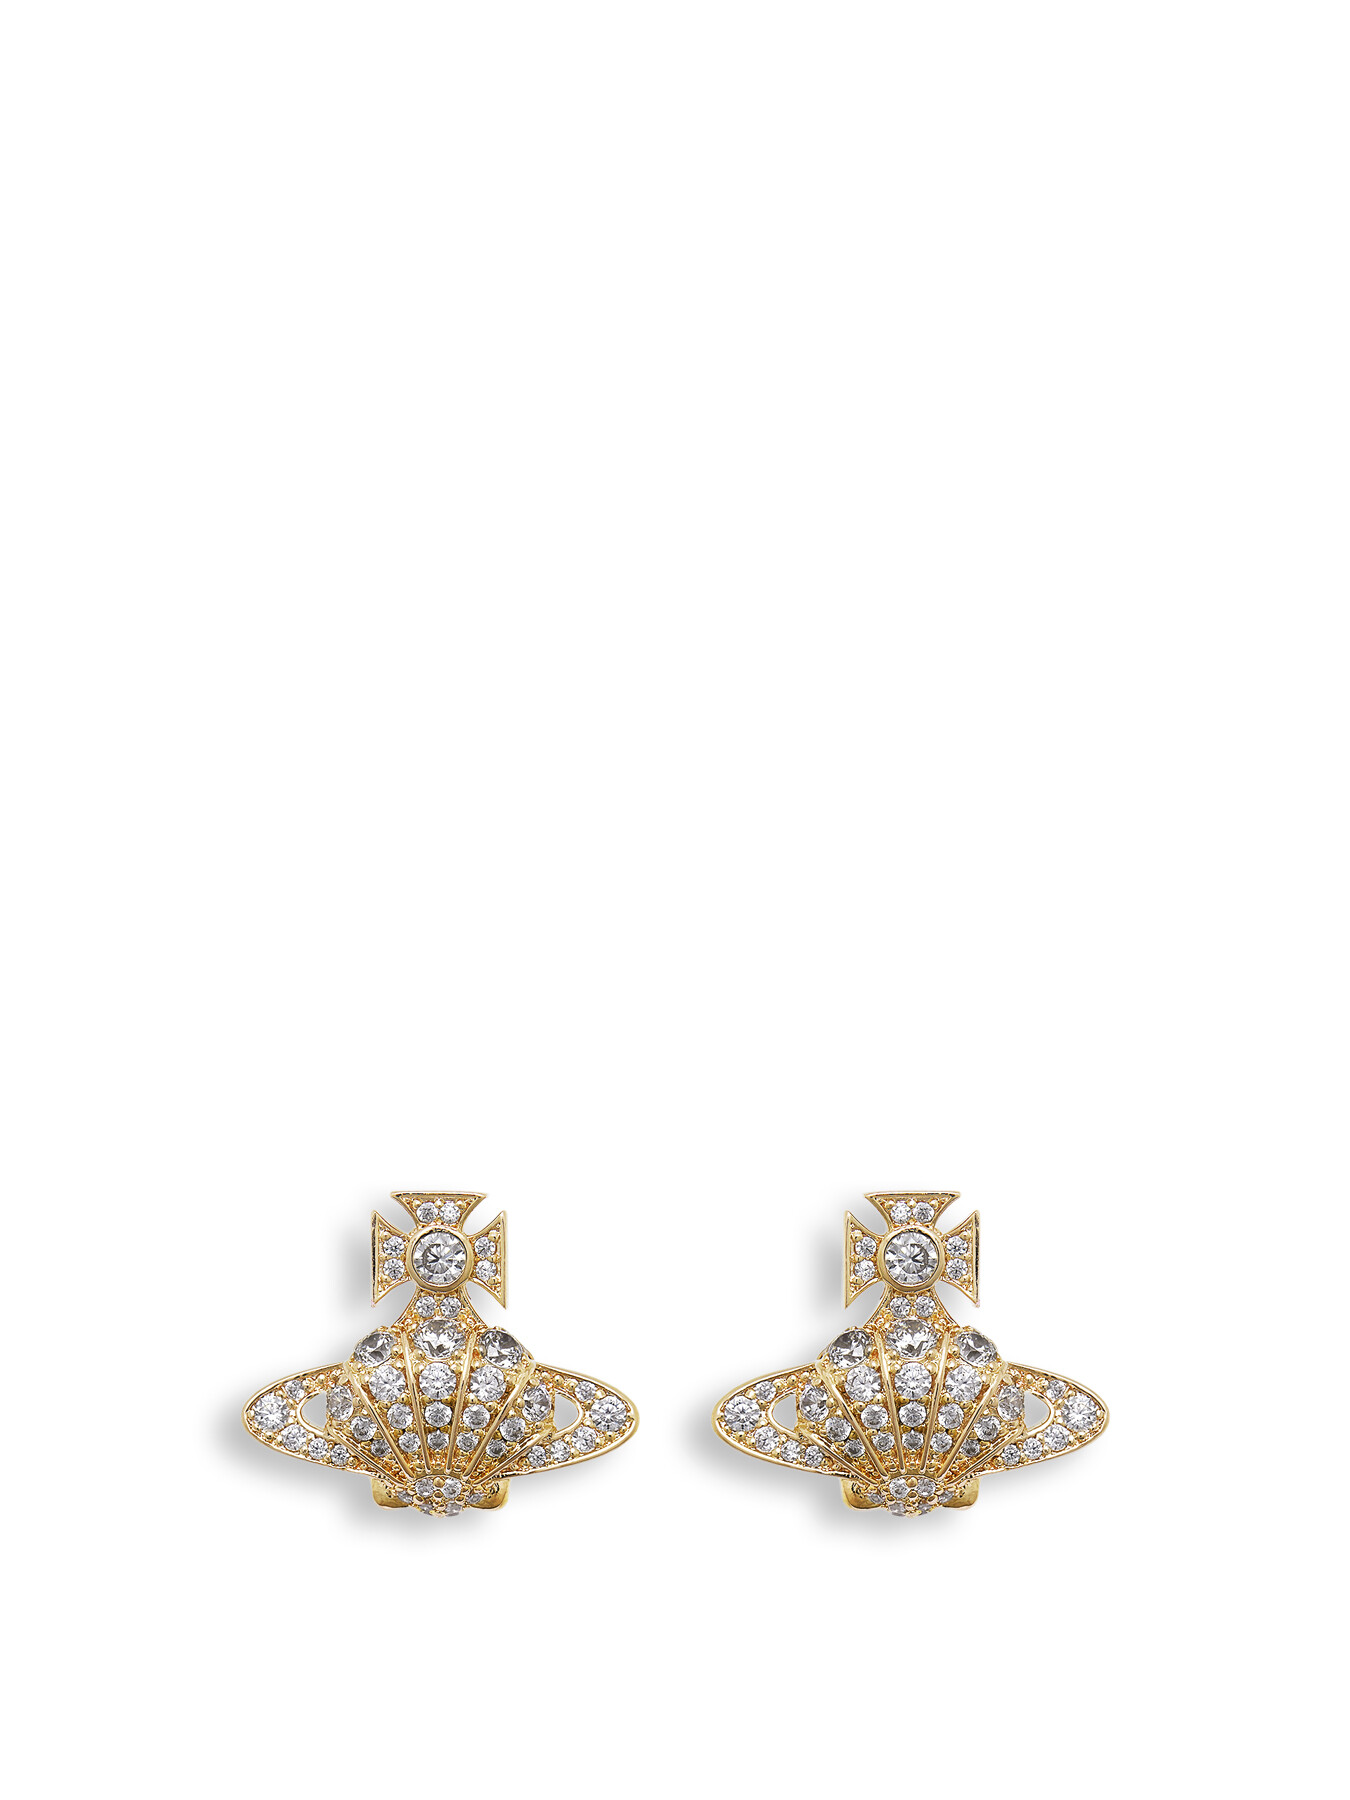 Vivienne Westwood Women's Natalina Earrings Gold